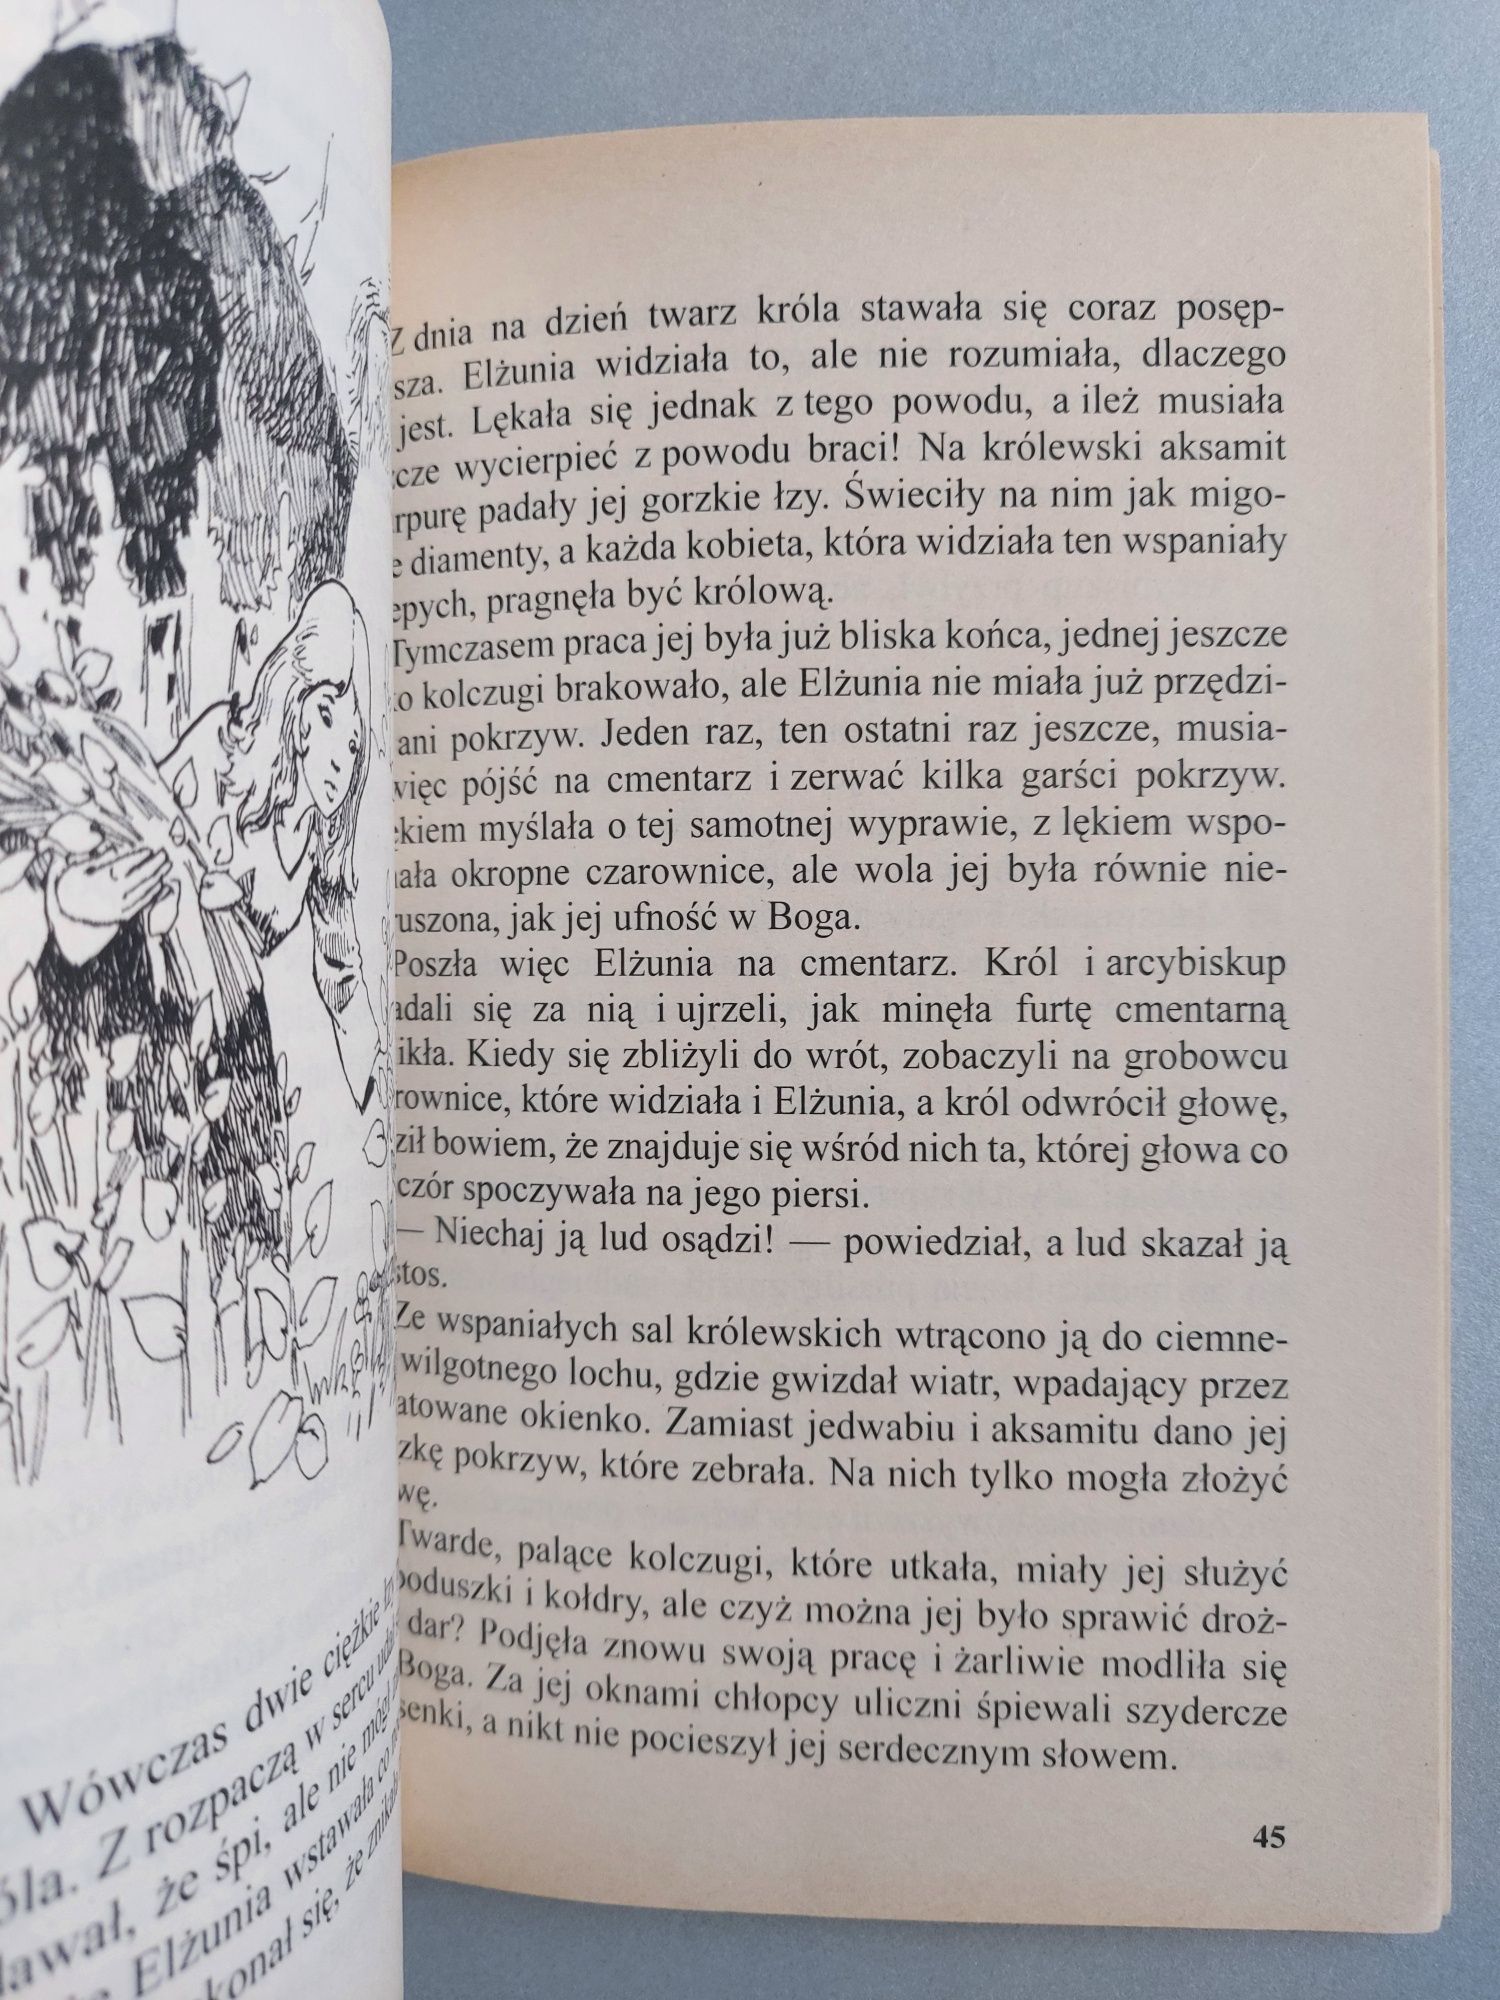 Calineczka i inne baśnie - Hans Christian Andersen